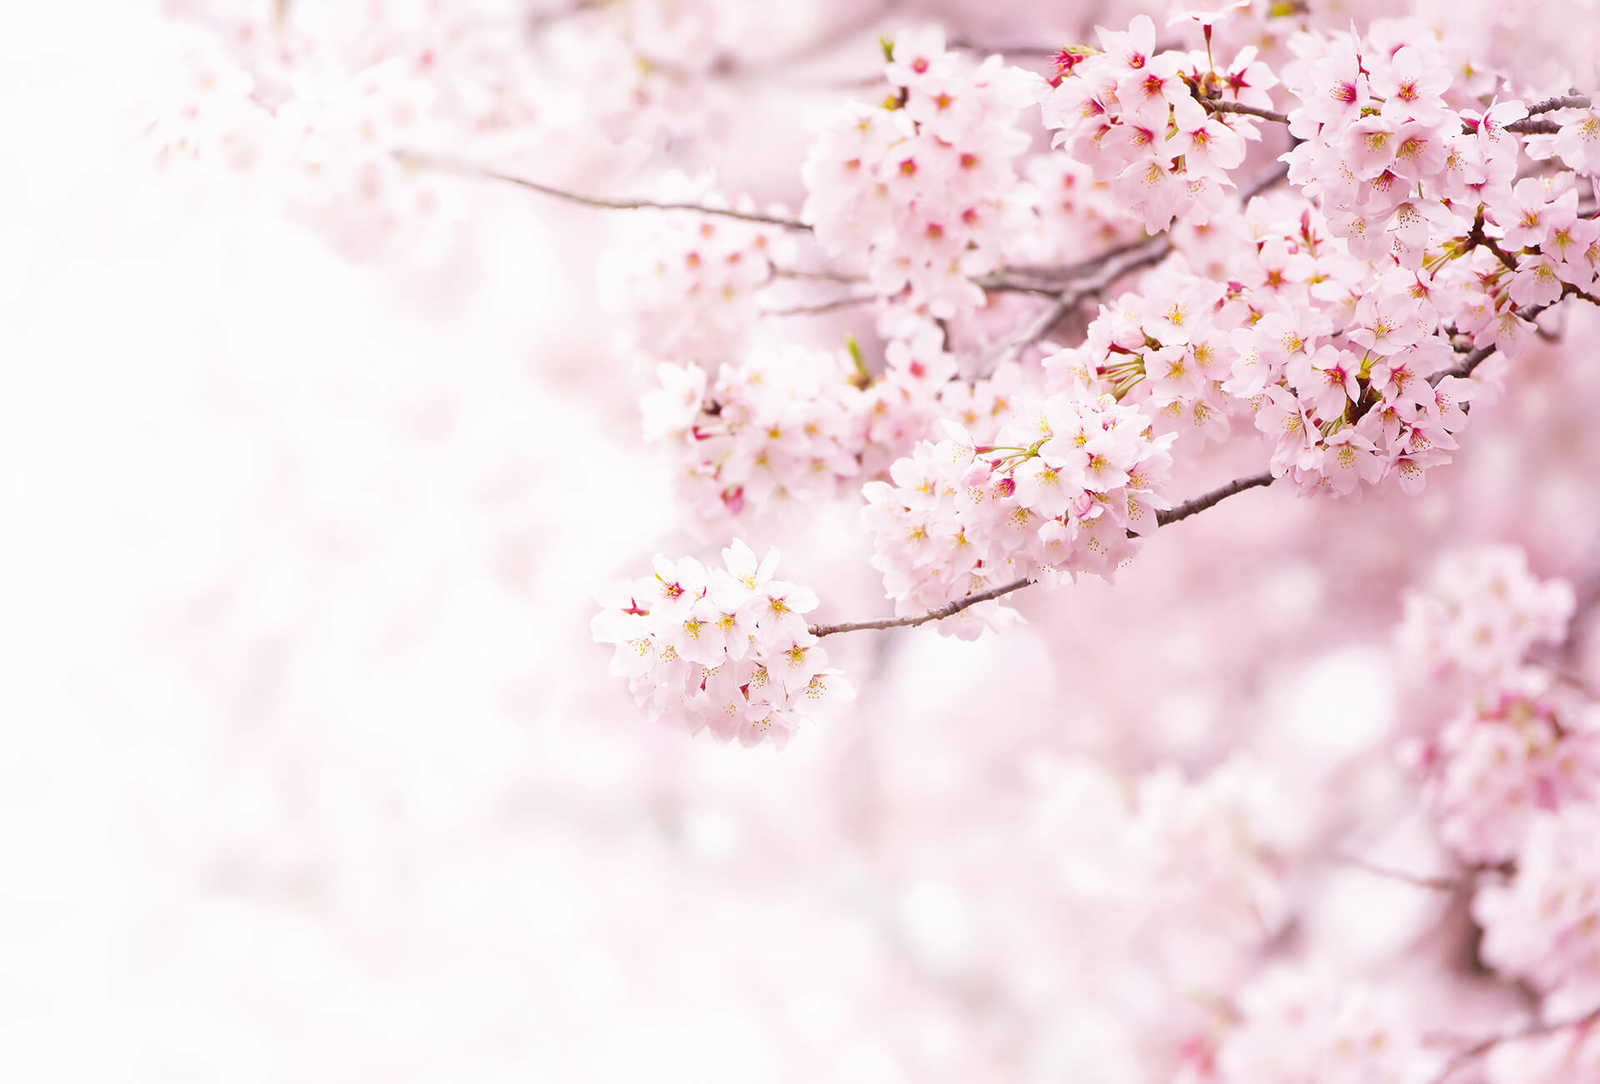         Fototapete rosa Blüten – Rosa, Weiß
    